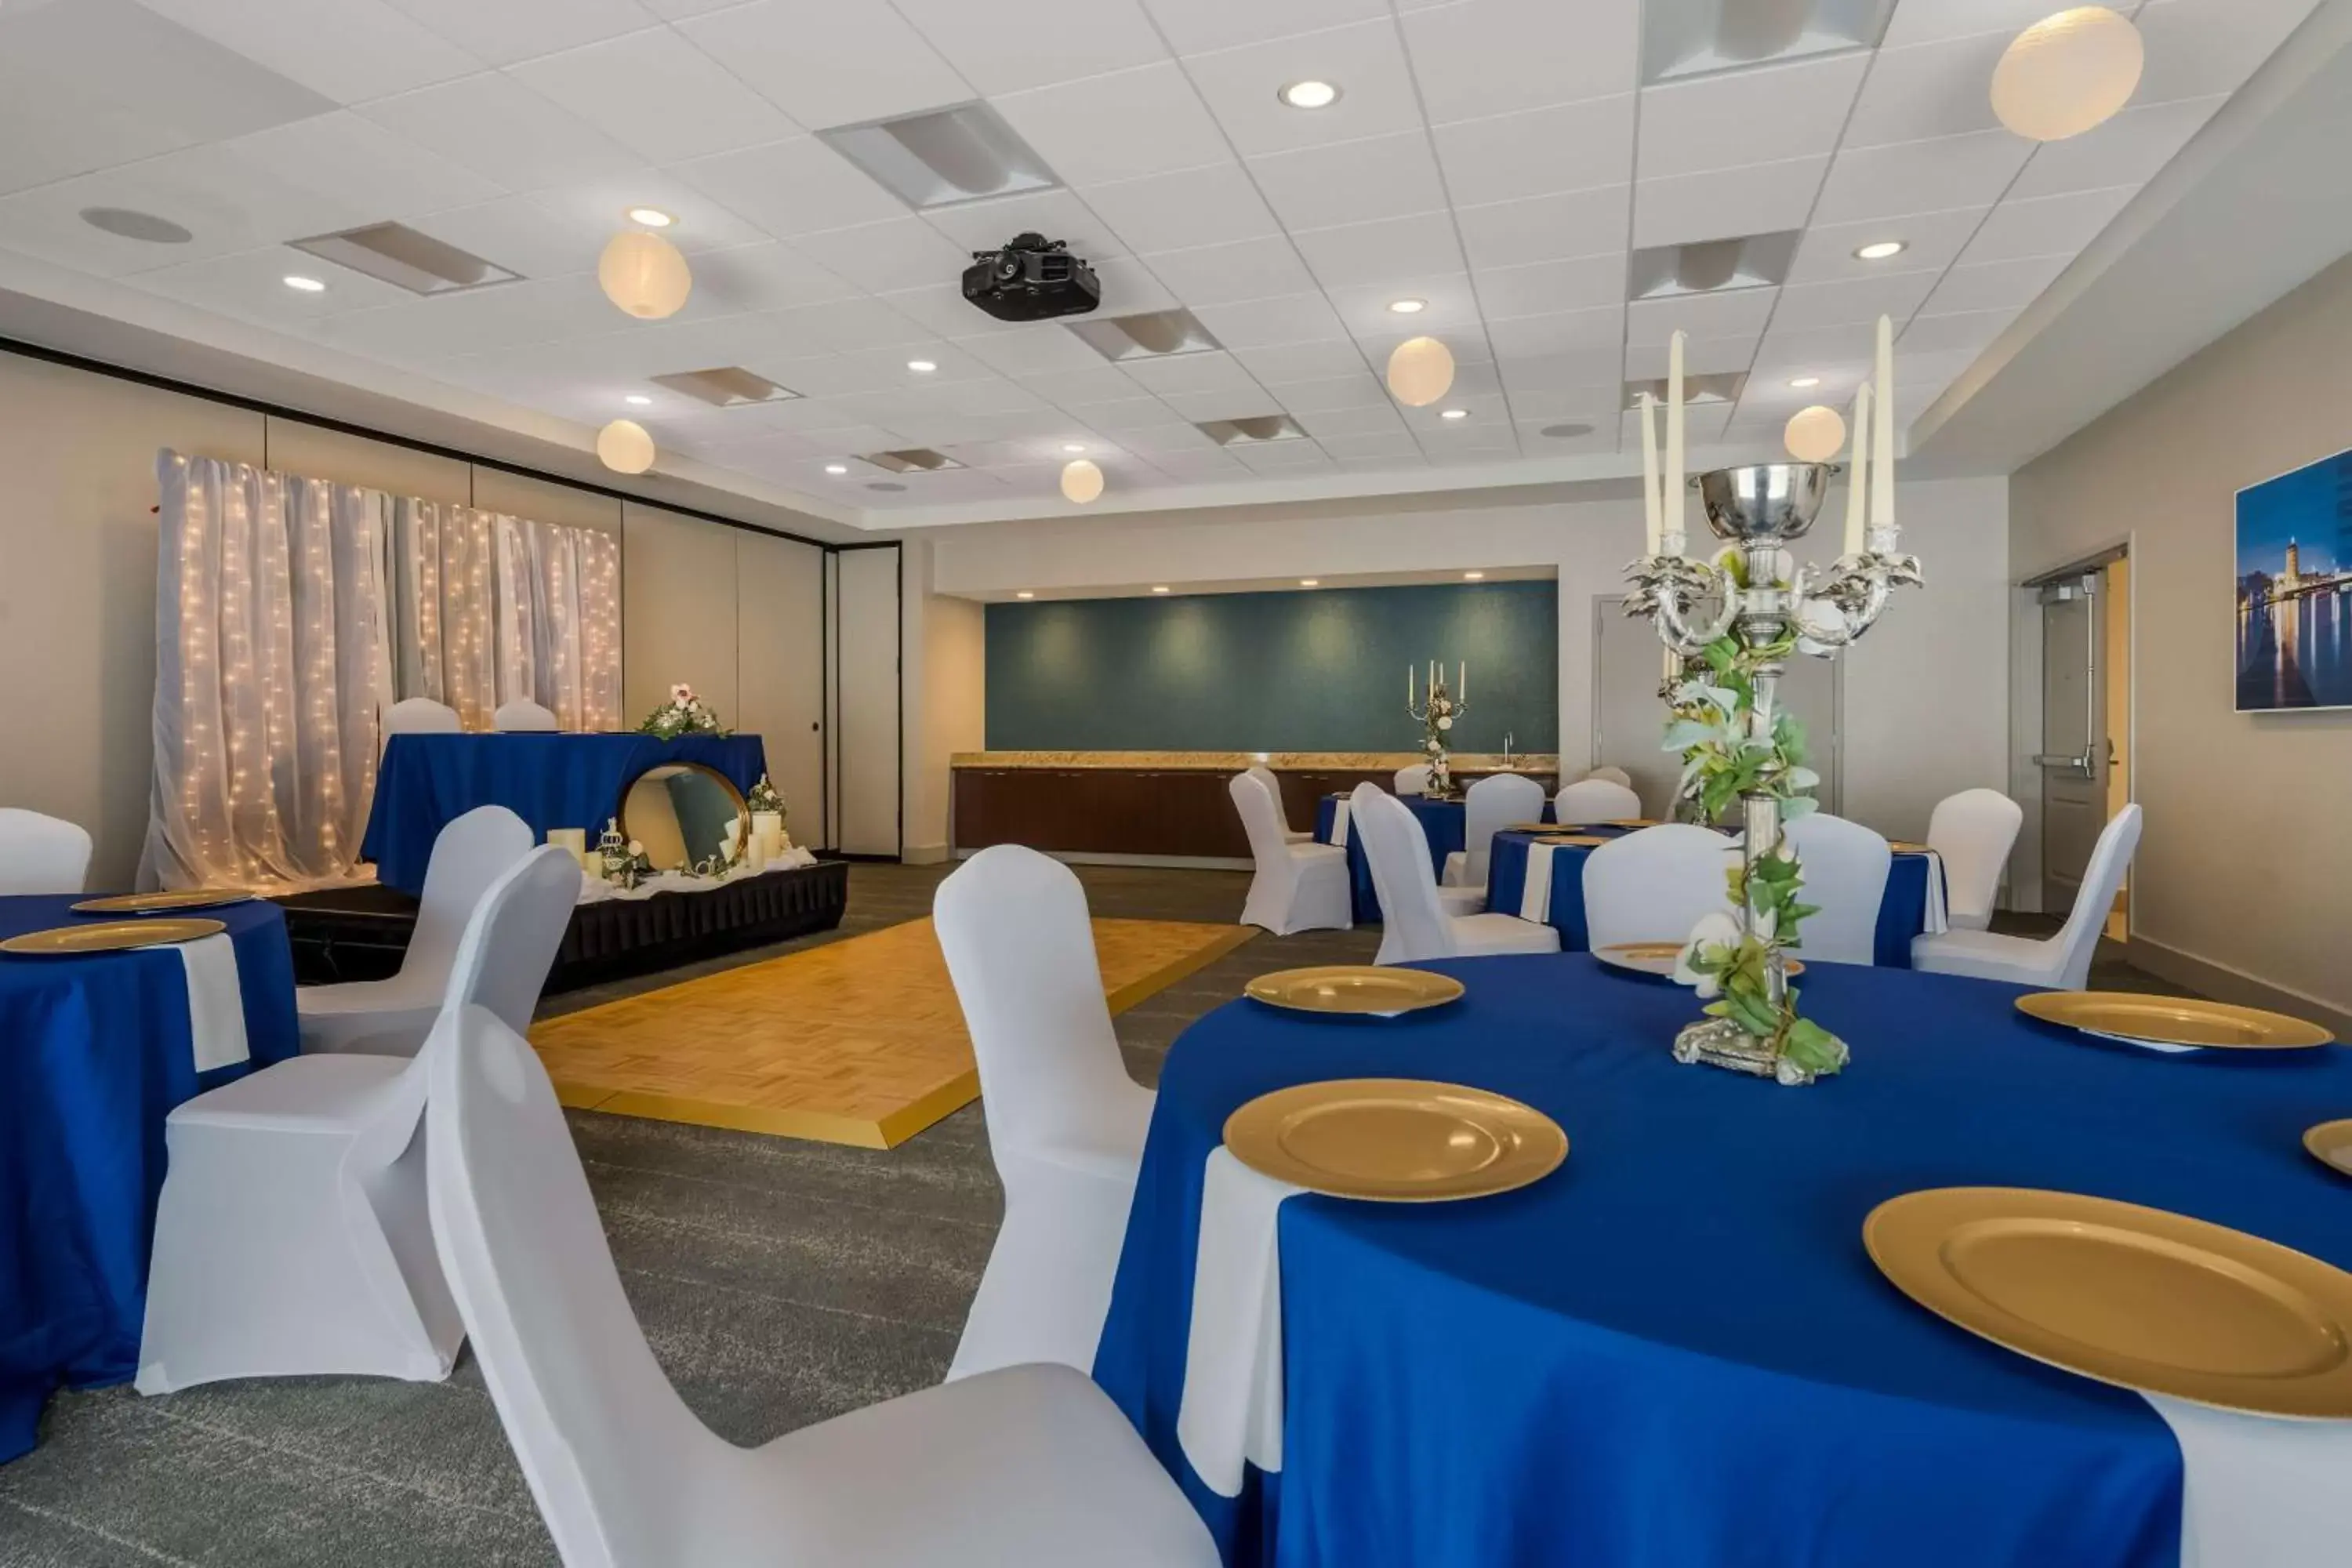 Meeting/conference room, Banquet Facilities in Hilton Garden Inn Rockford